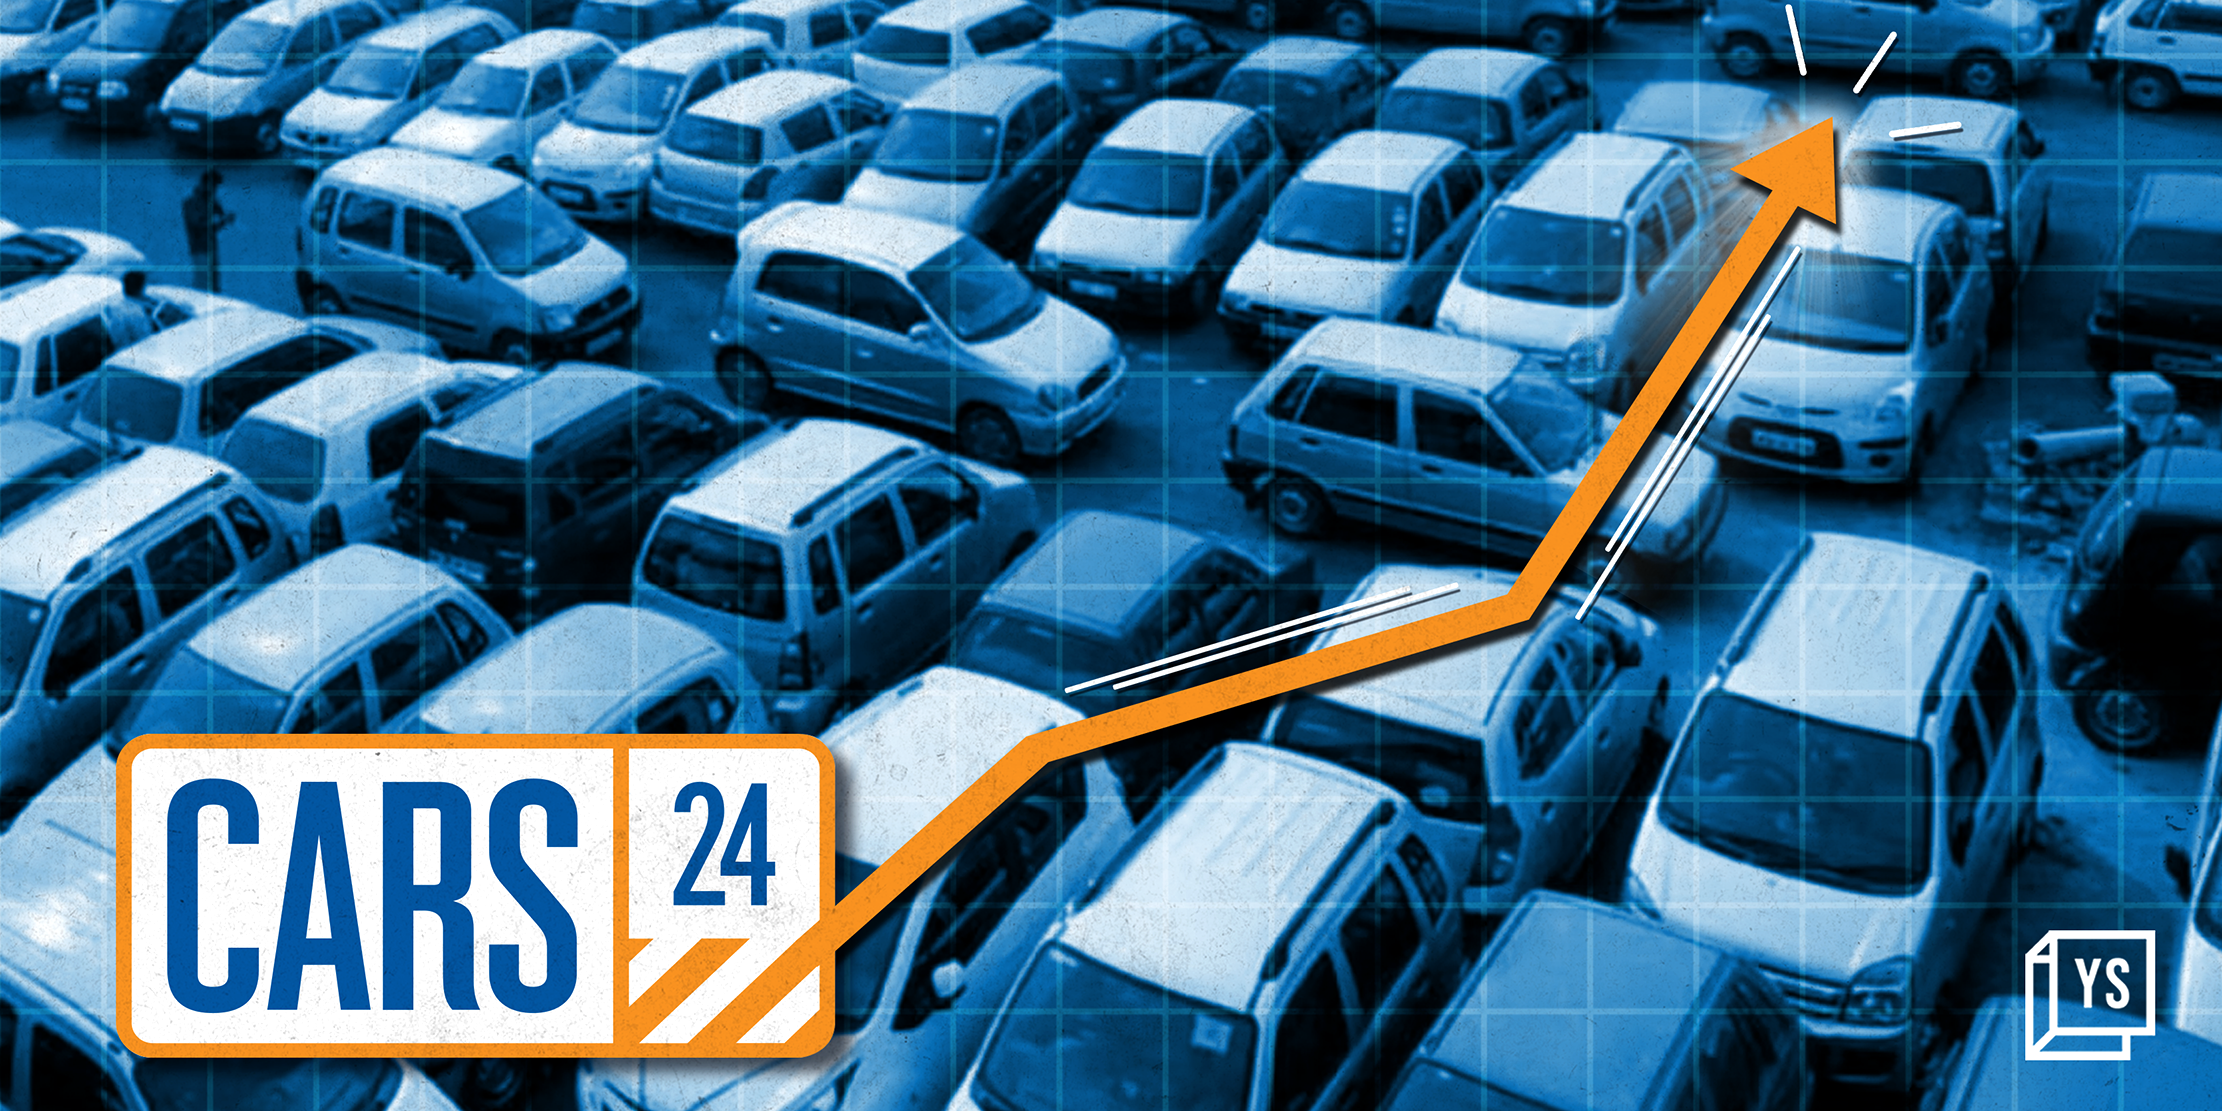 Despite risks, Cars24 hits the gas on retail biz with eye on near-term profitability